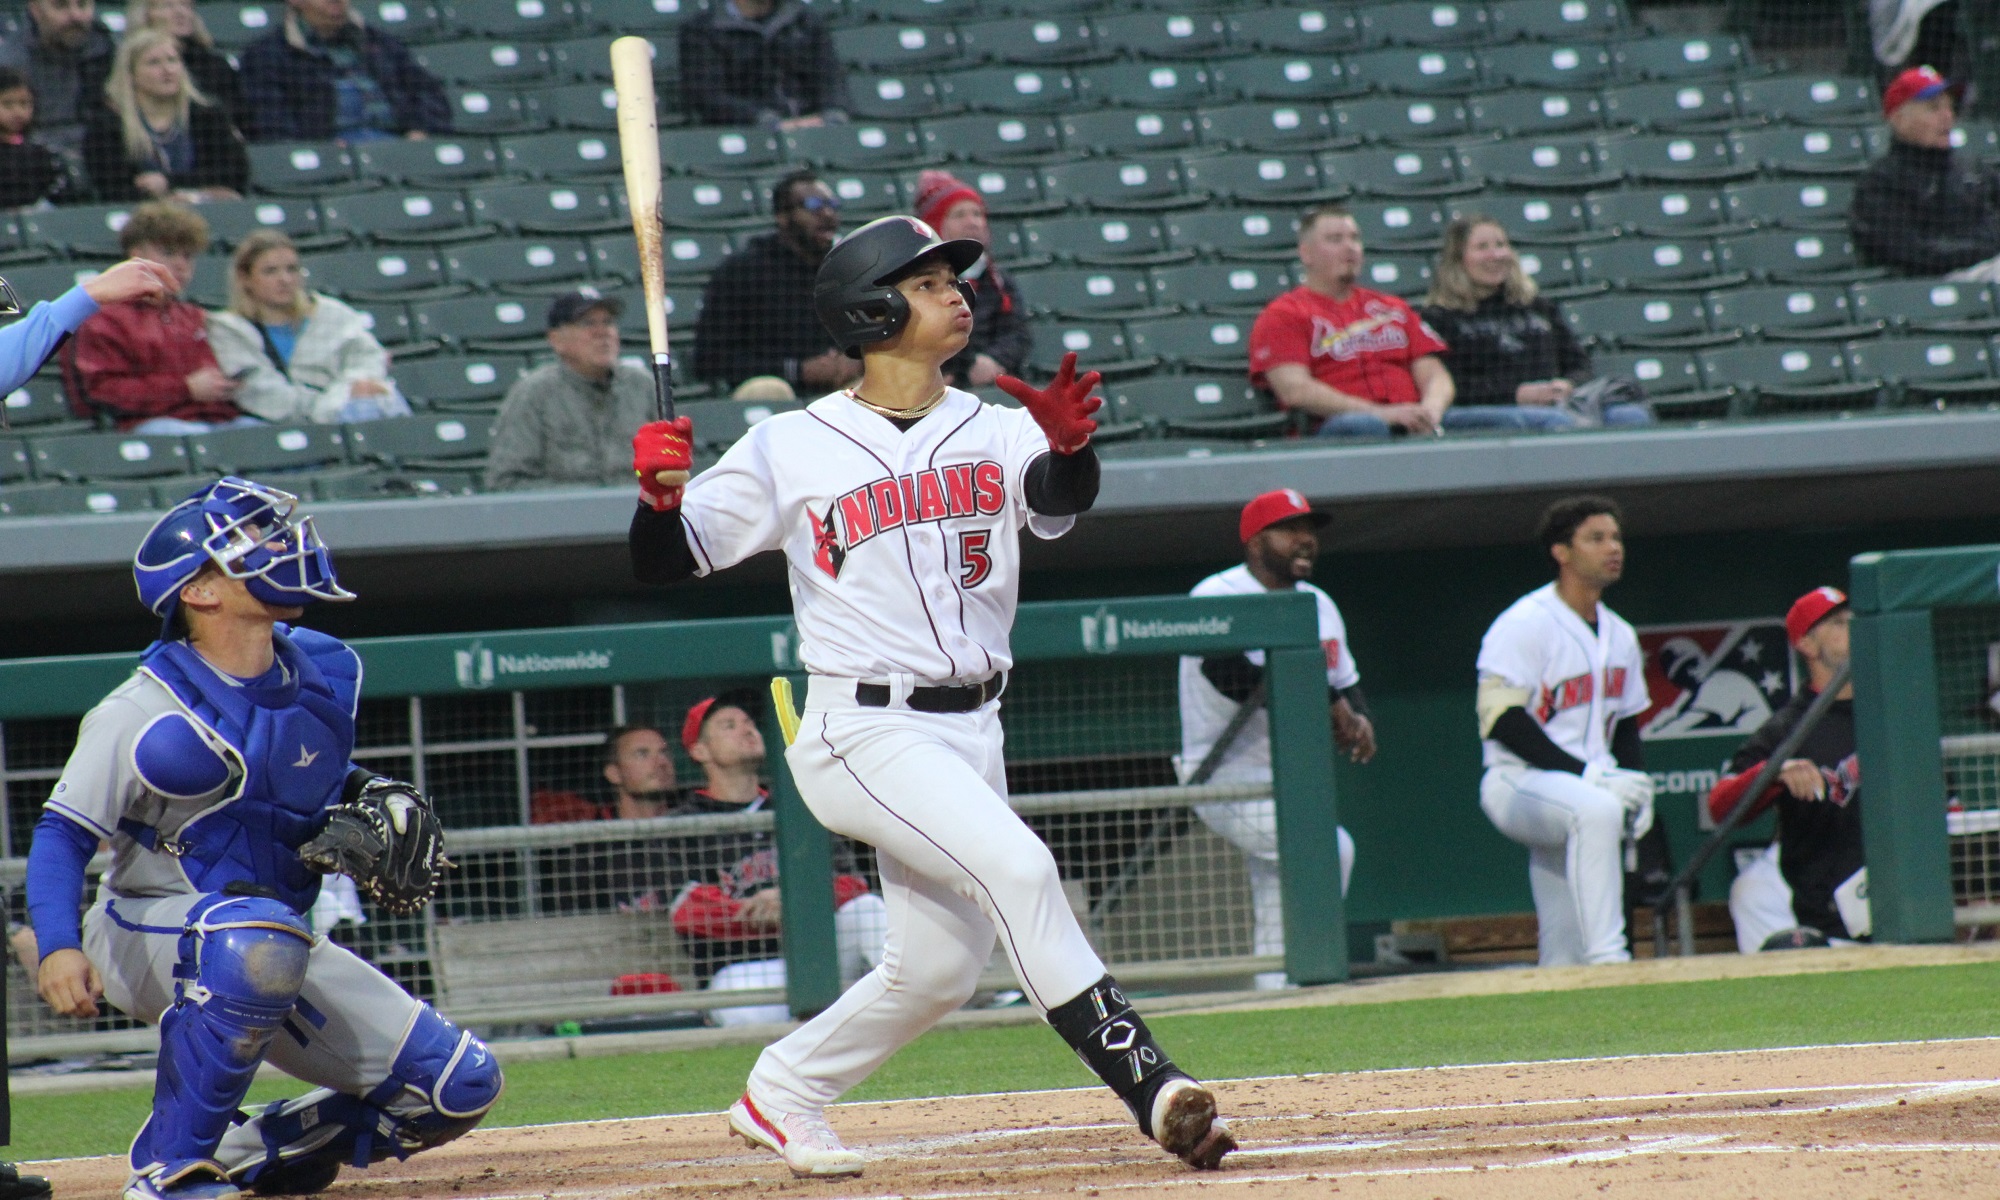 Endy Rodríguez hits his 1st major league home run to help the